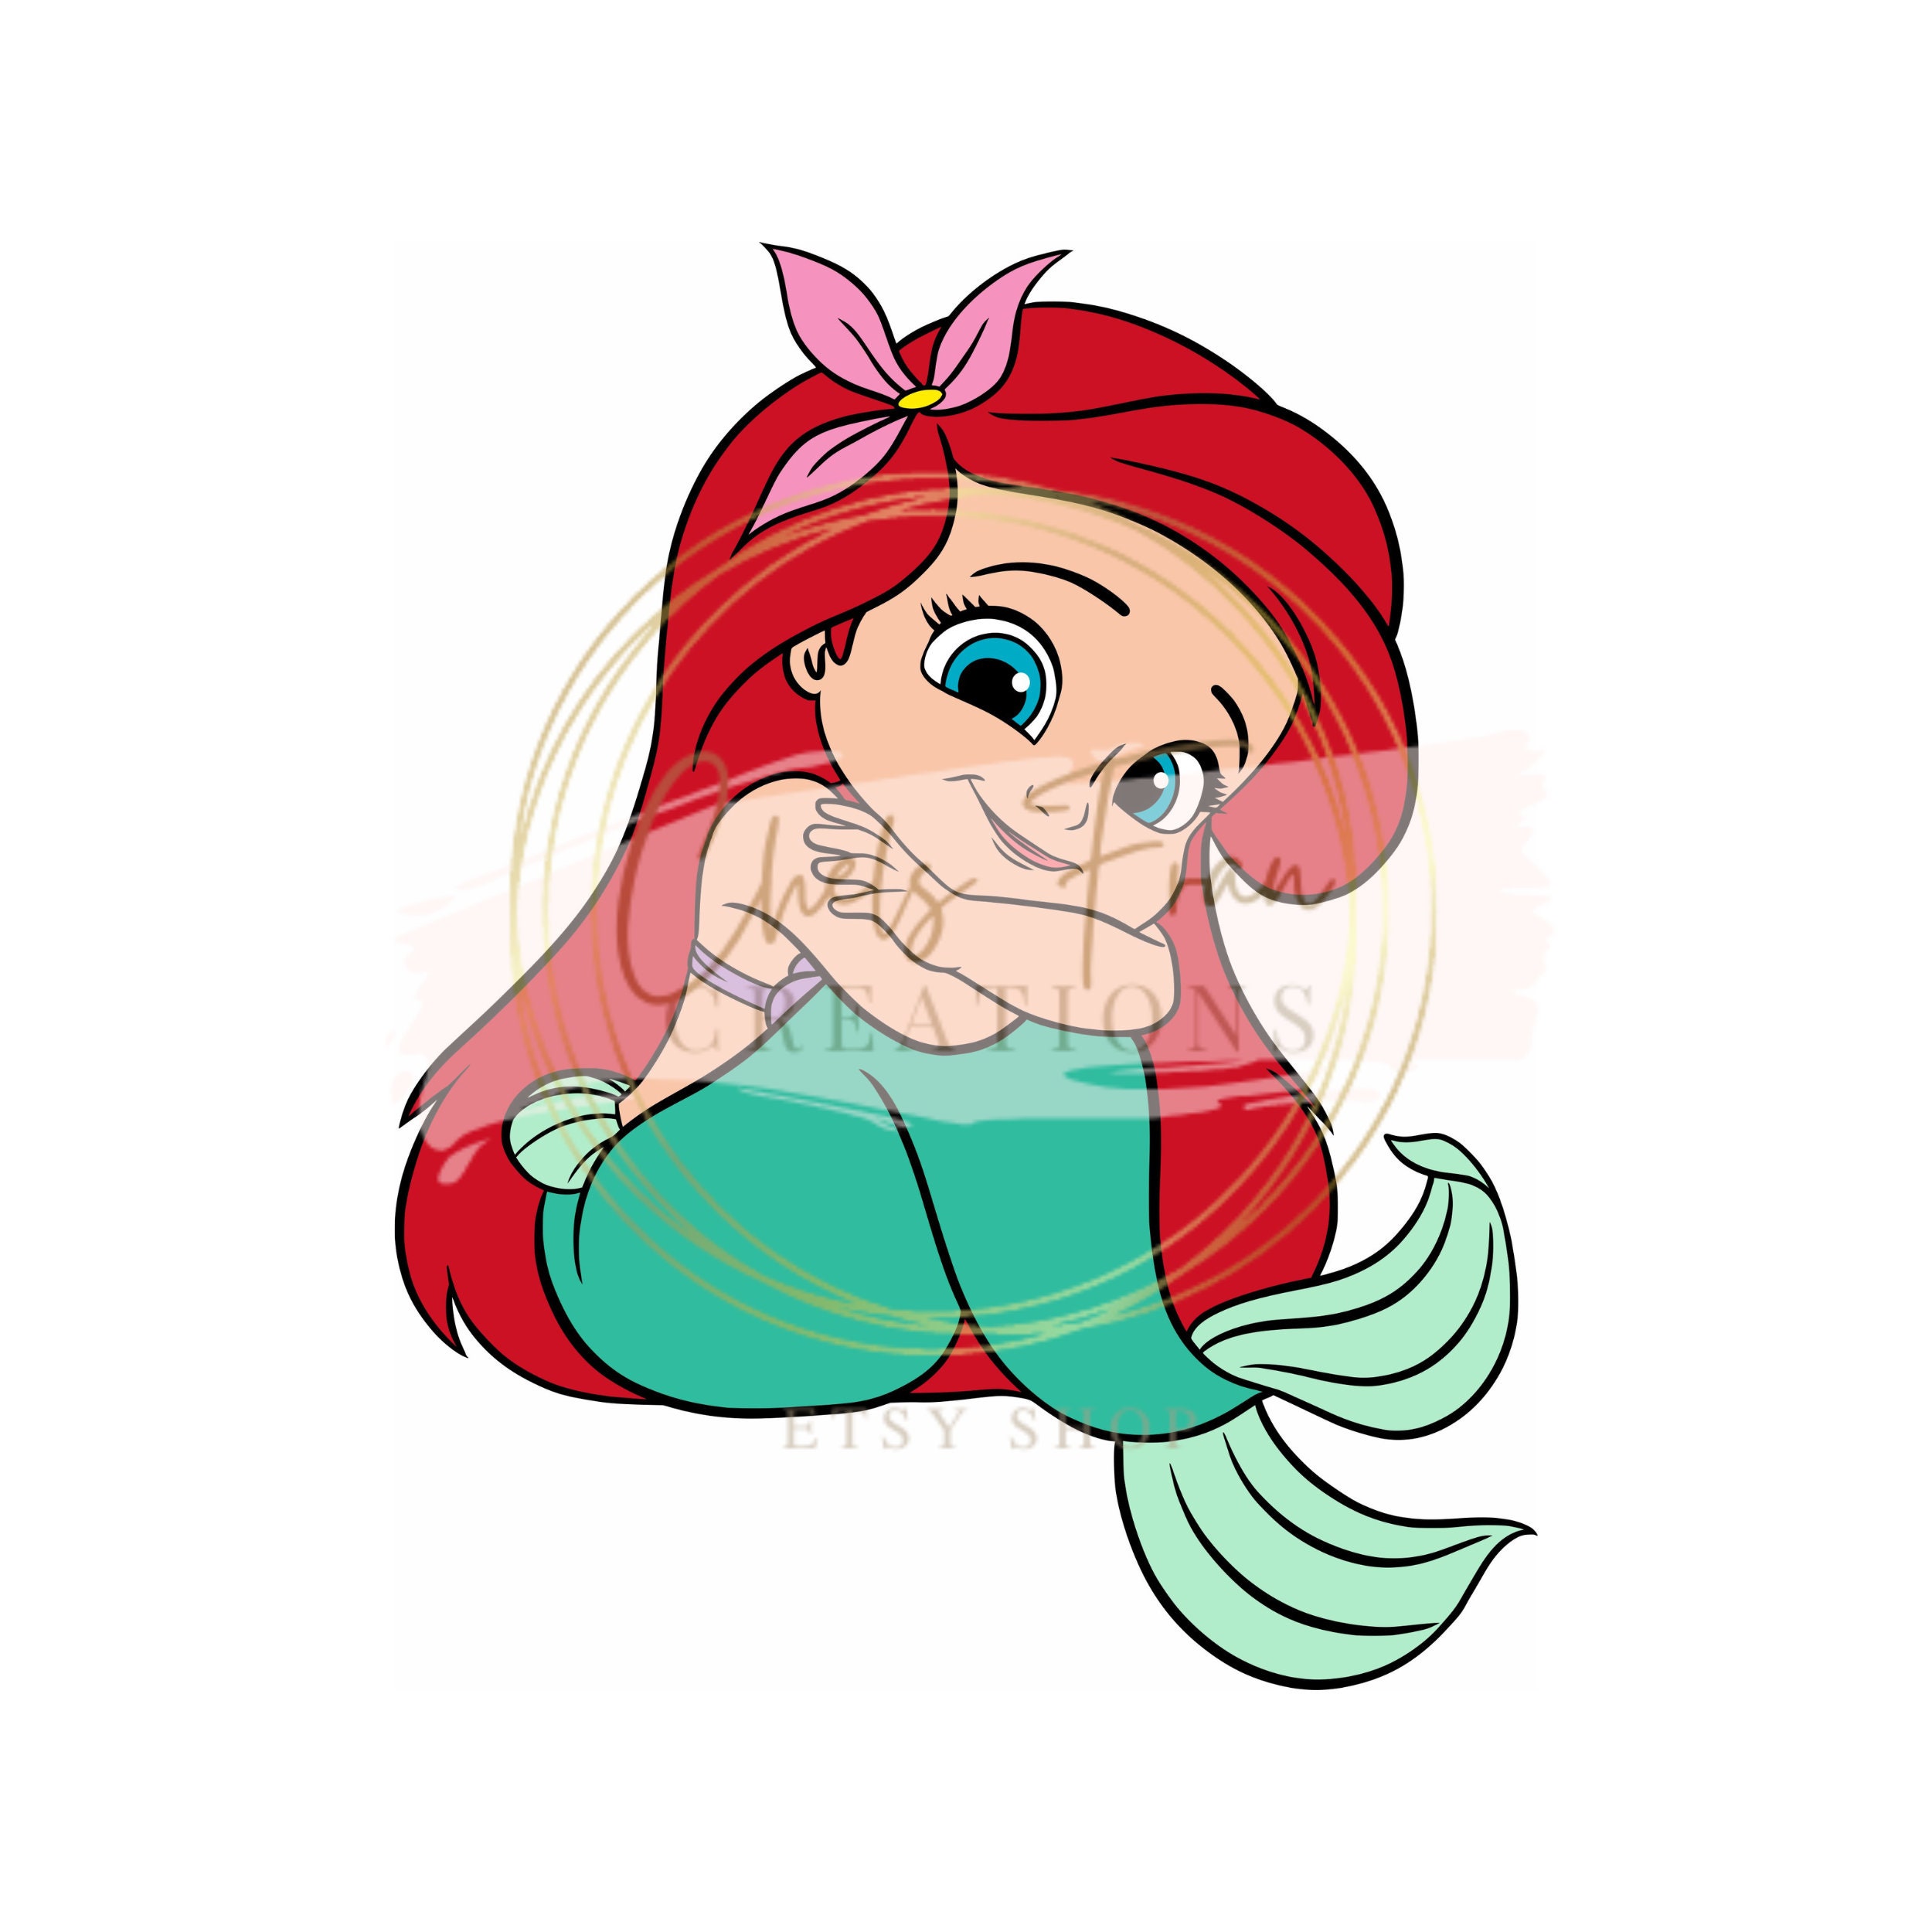 Princess Turned Into Mermaid - Jogue Princess Turned Into Mermaid